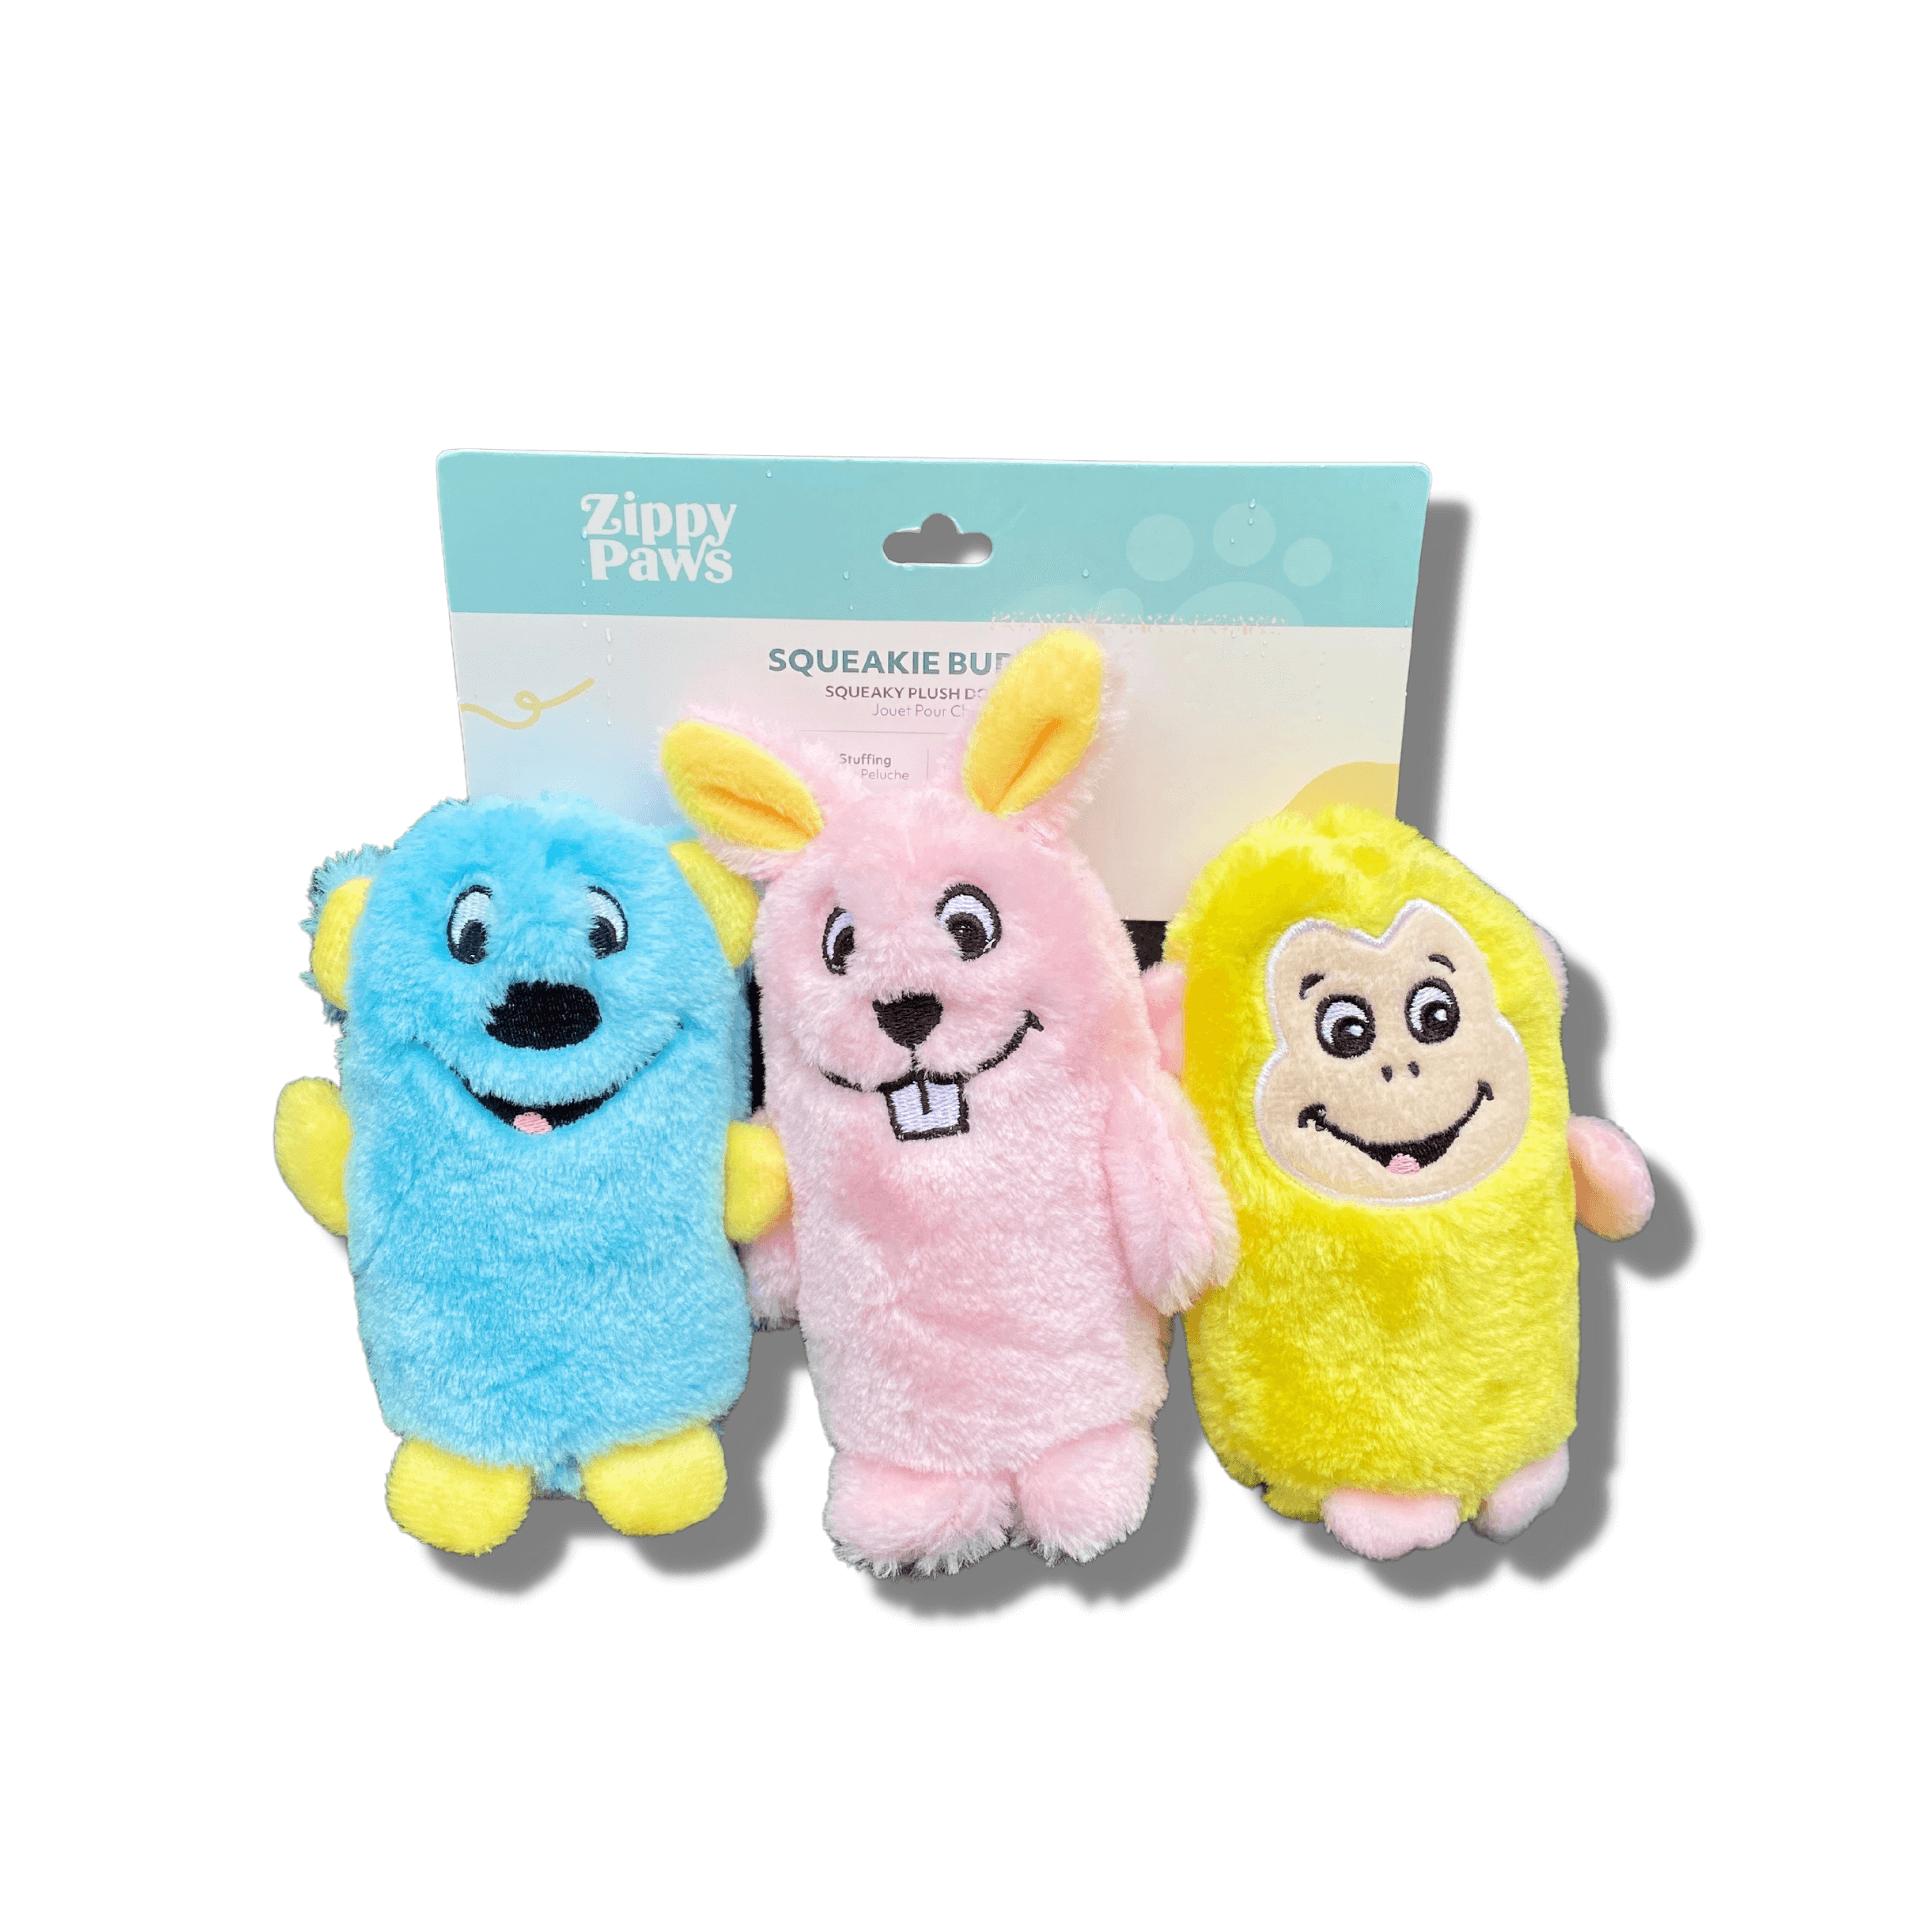 easter themed dog toys, bunny, monkey and bear,